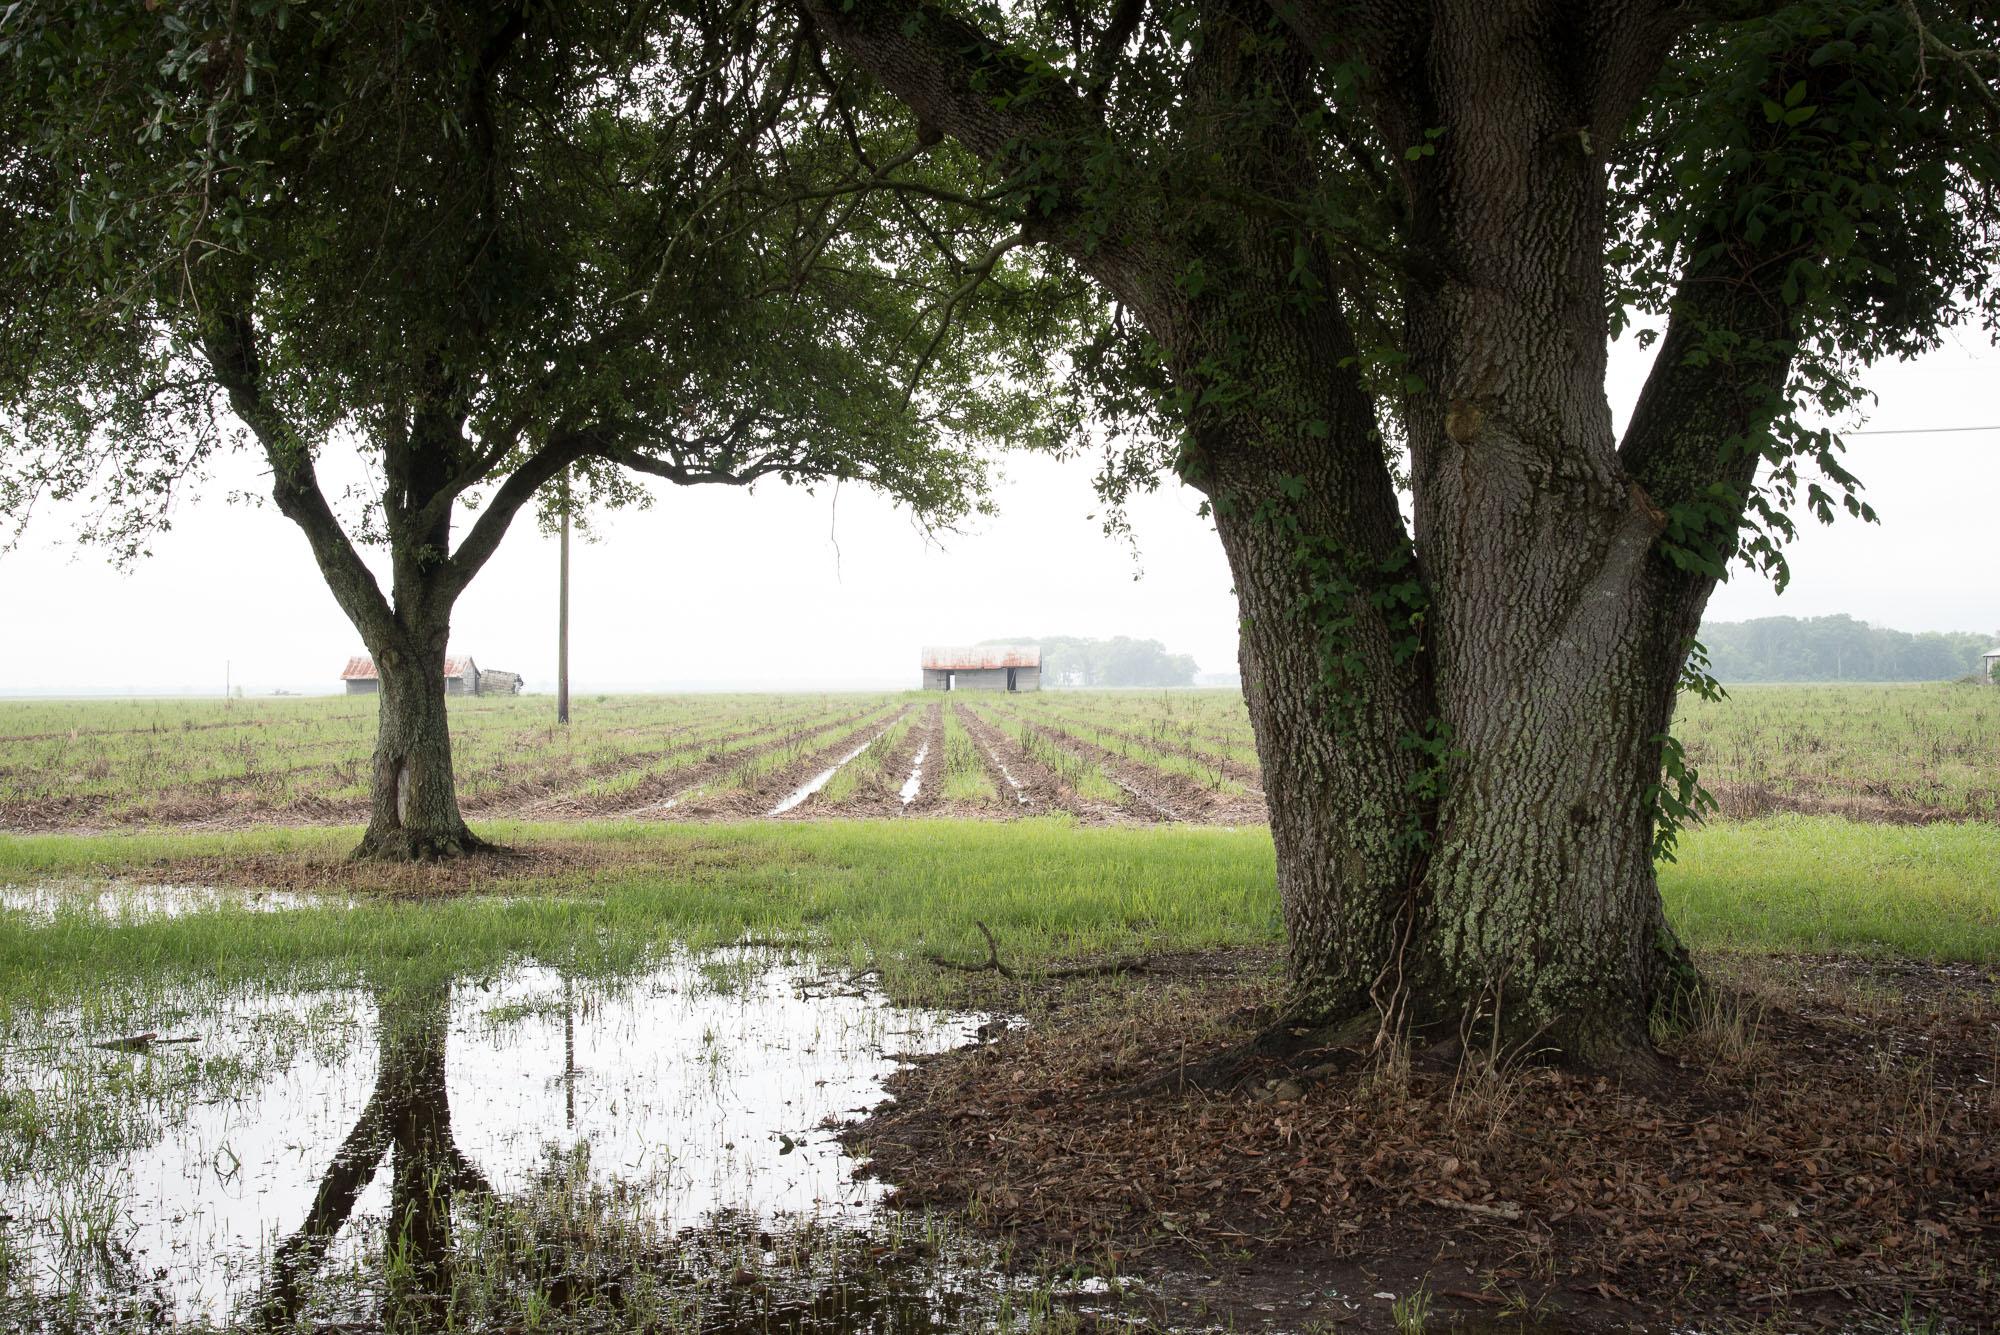  Slave Dwellings -   Slave Dwellings and Fields, St James Parish, Louisiana  